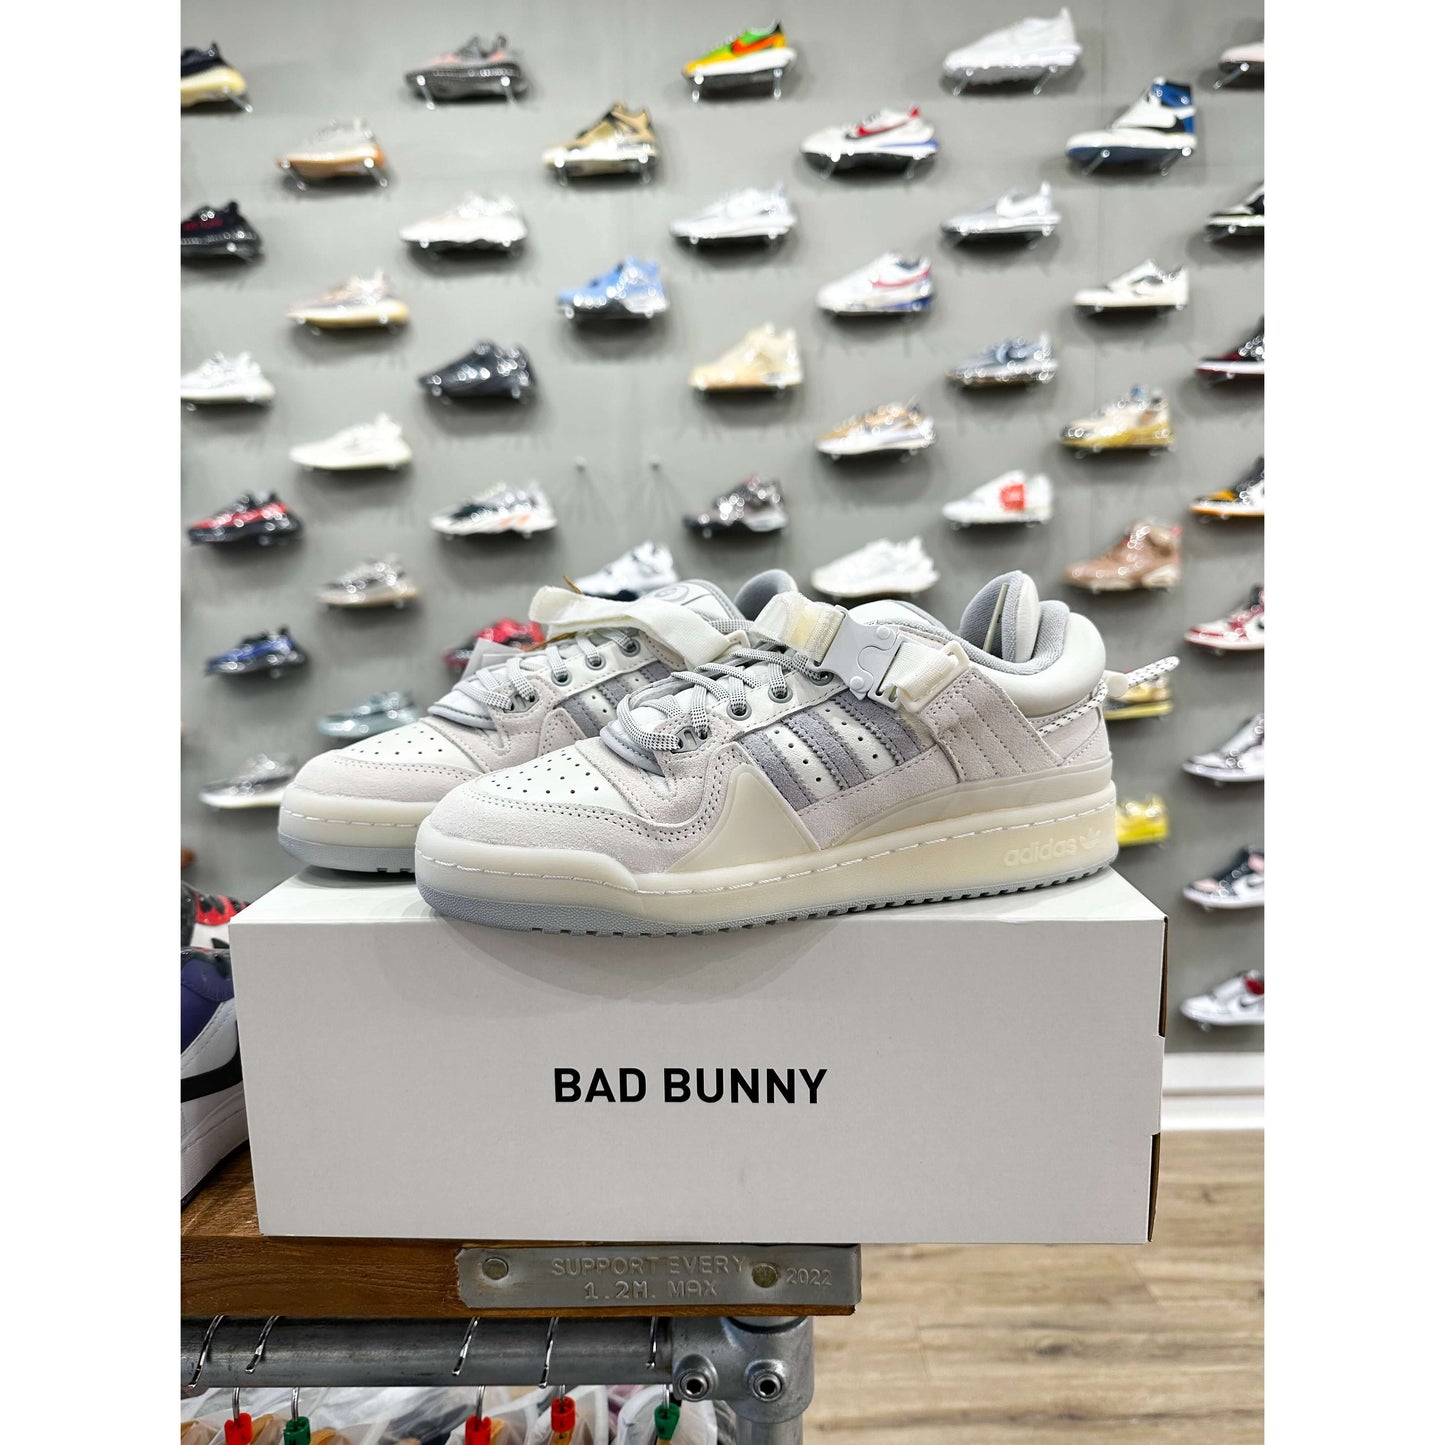 Bad Bunny x adidas Forum Buckle Low Last Forum from Adidas